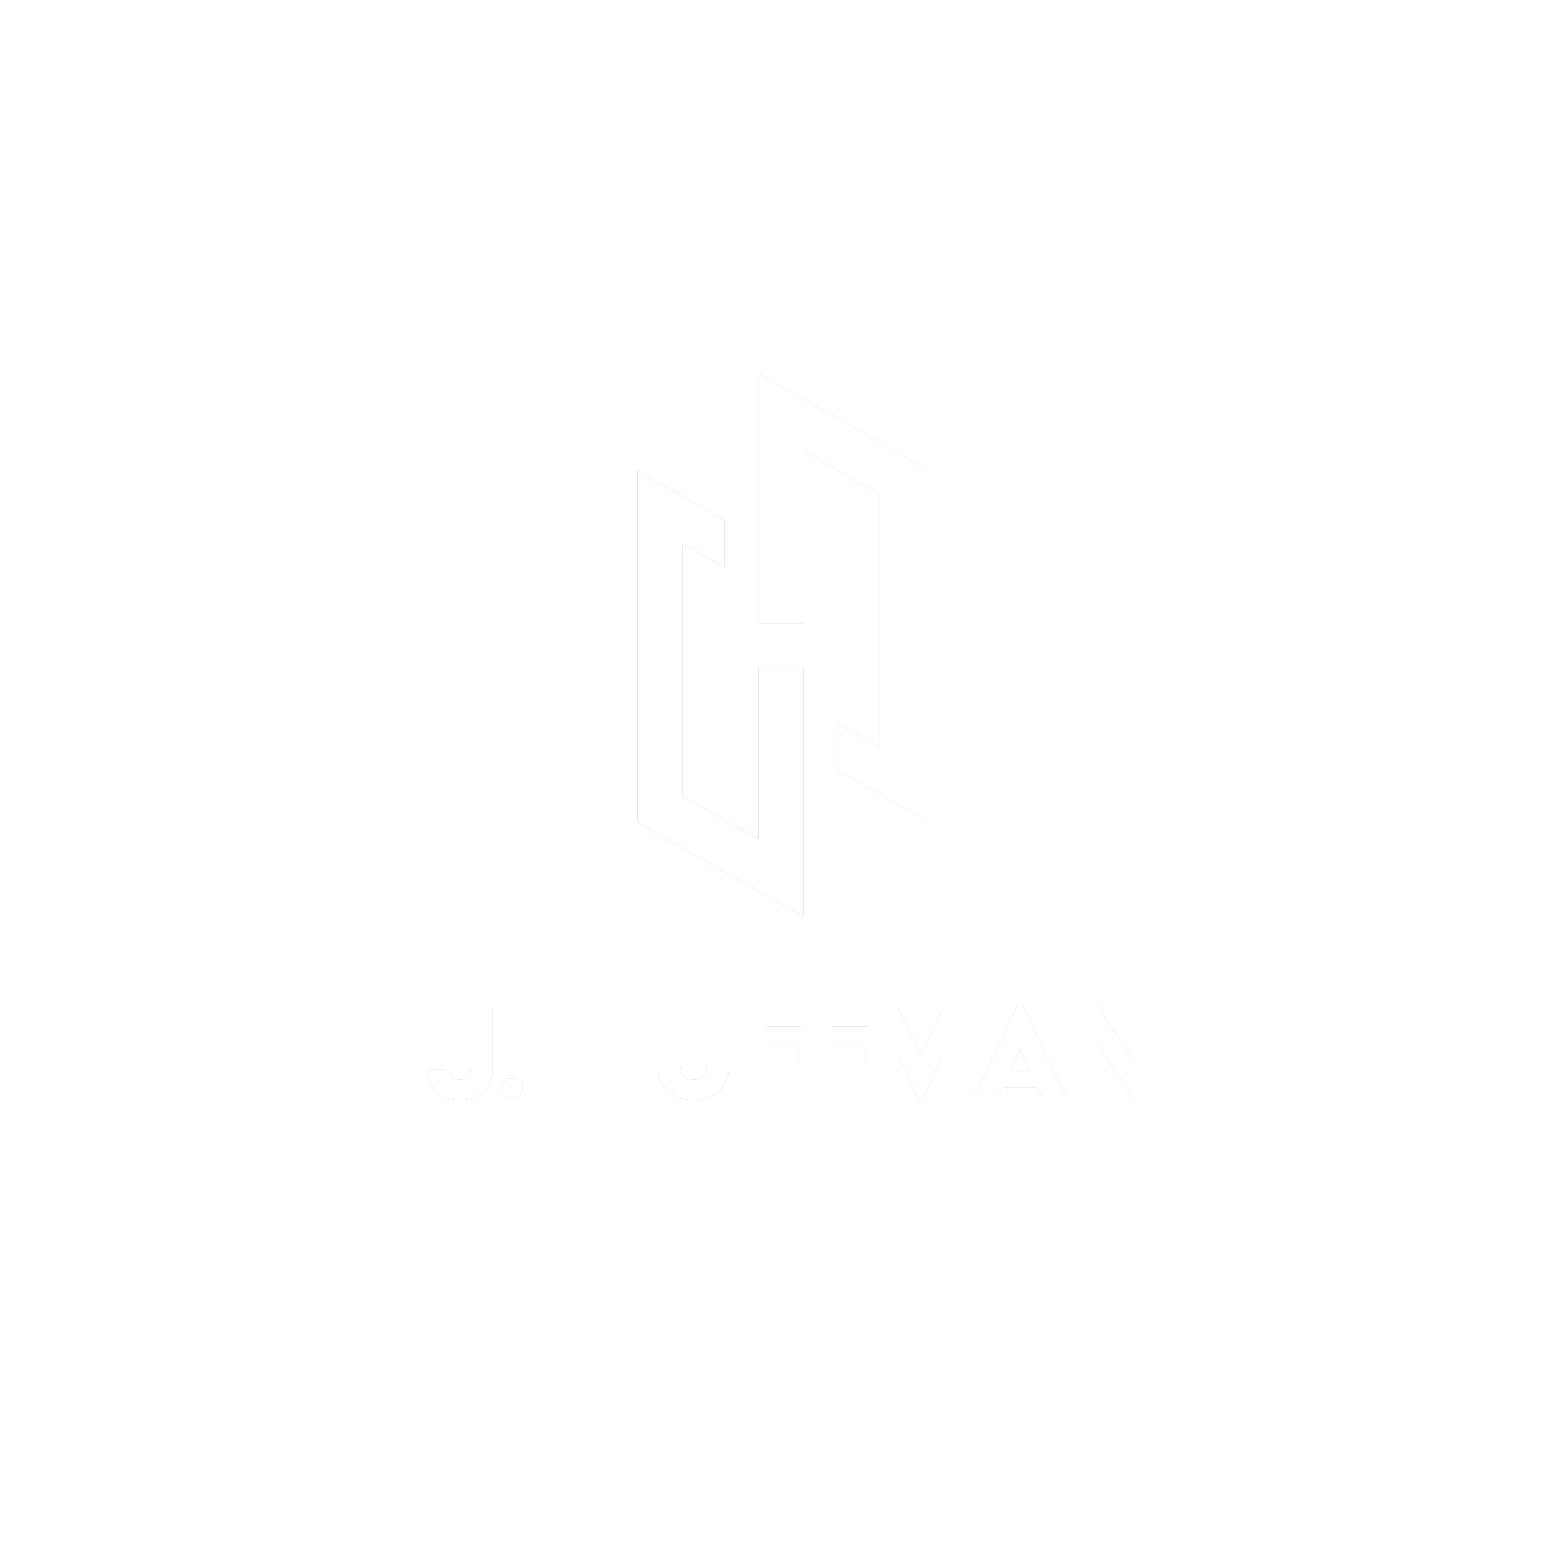 JHuffman II